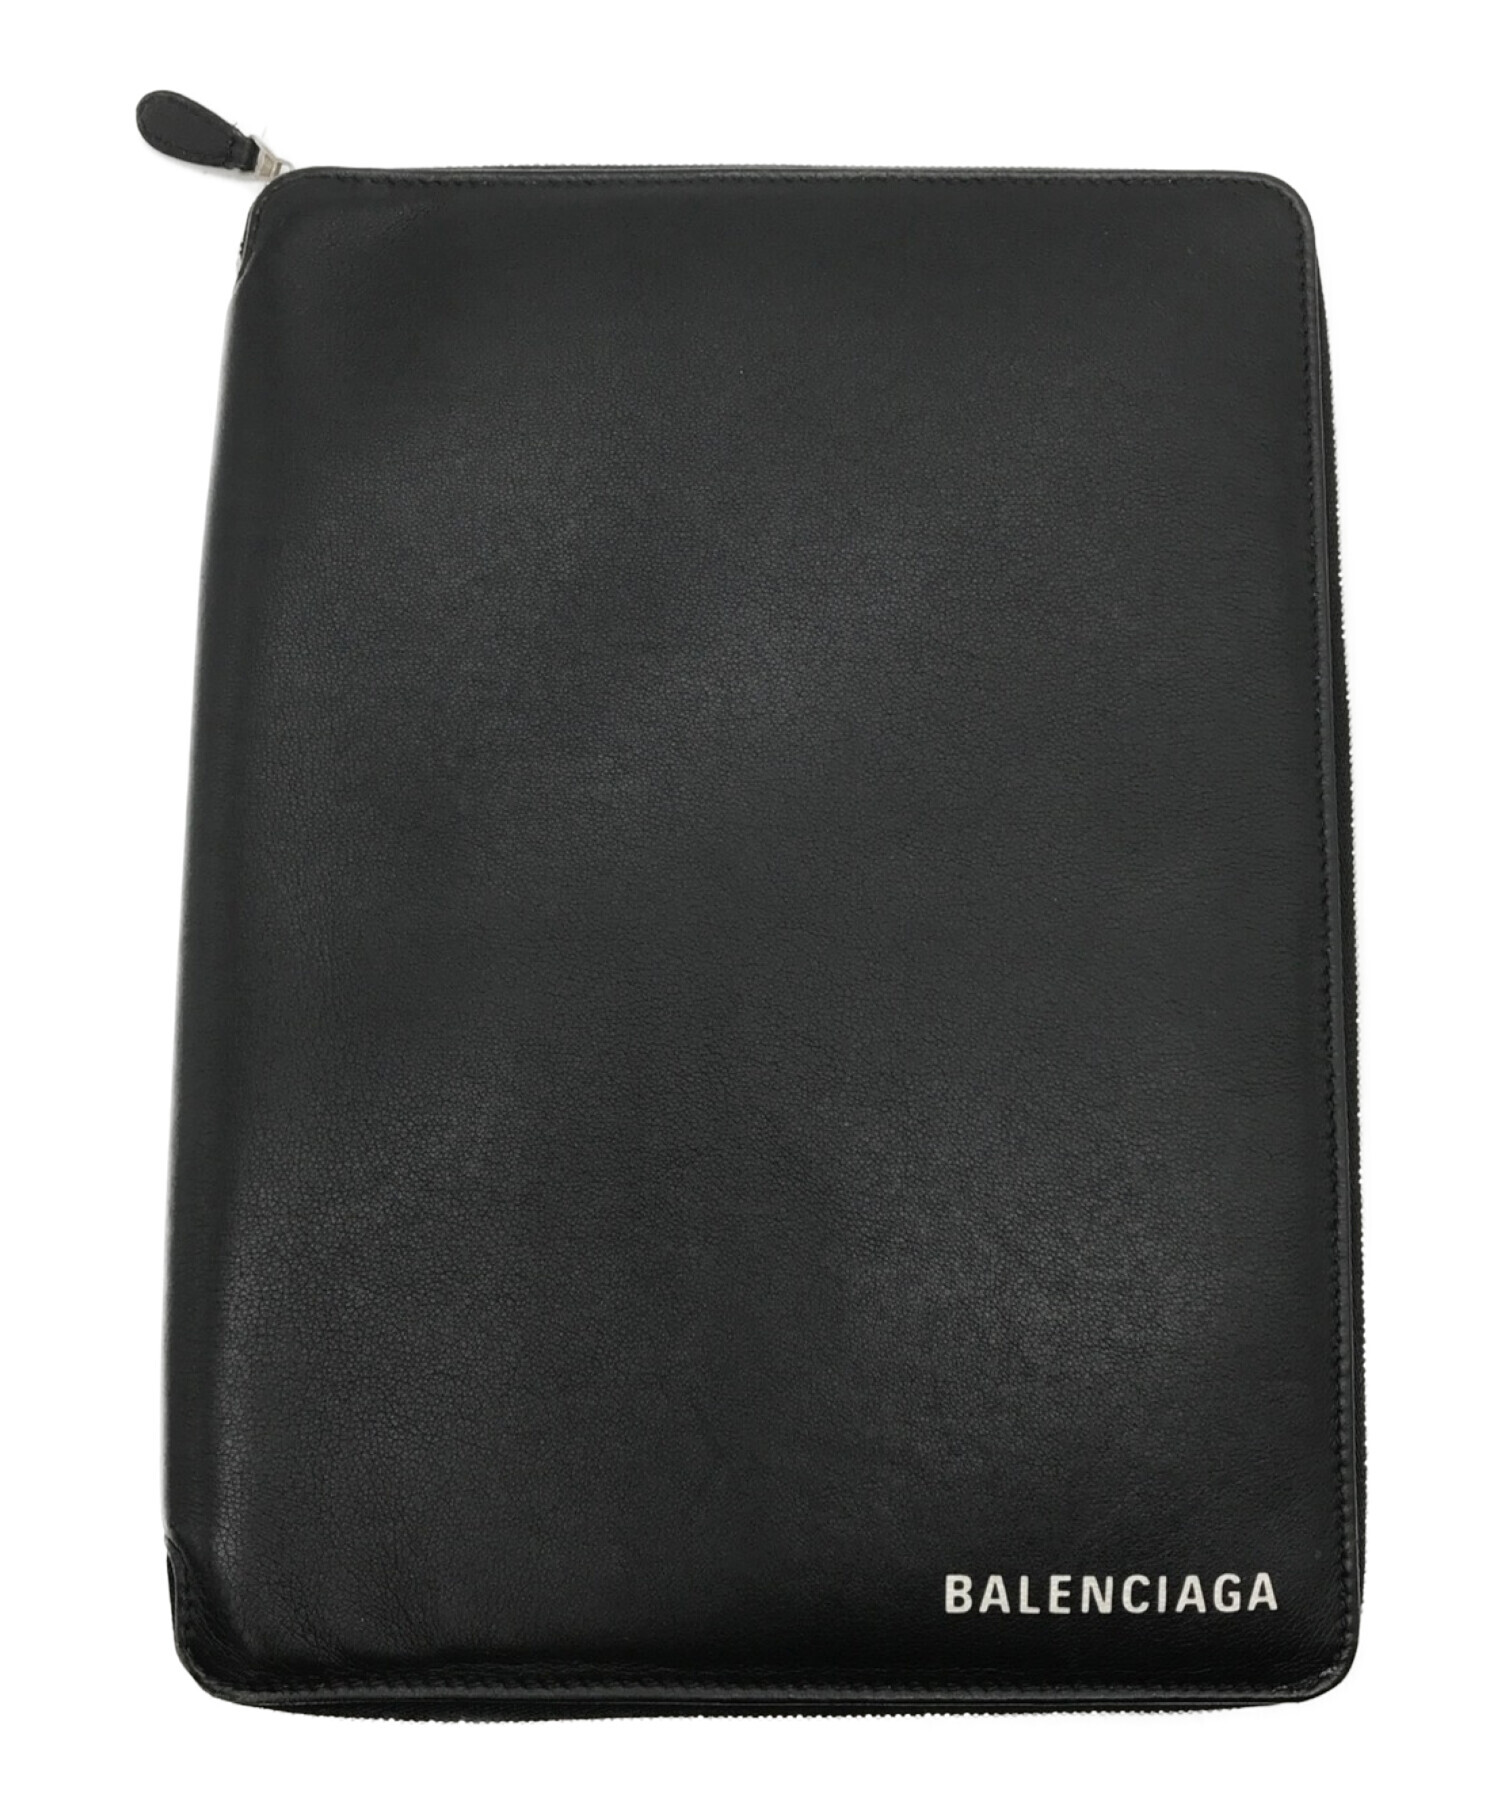 BALENCIAGA (バレンシアガ) クラッチバッグ ブラック